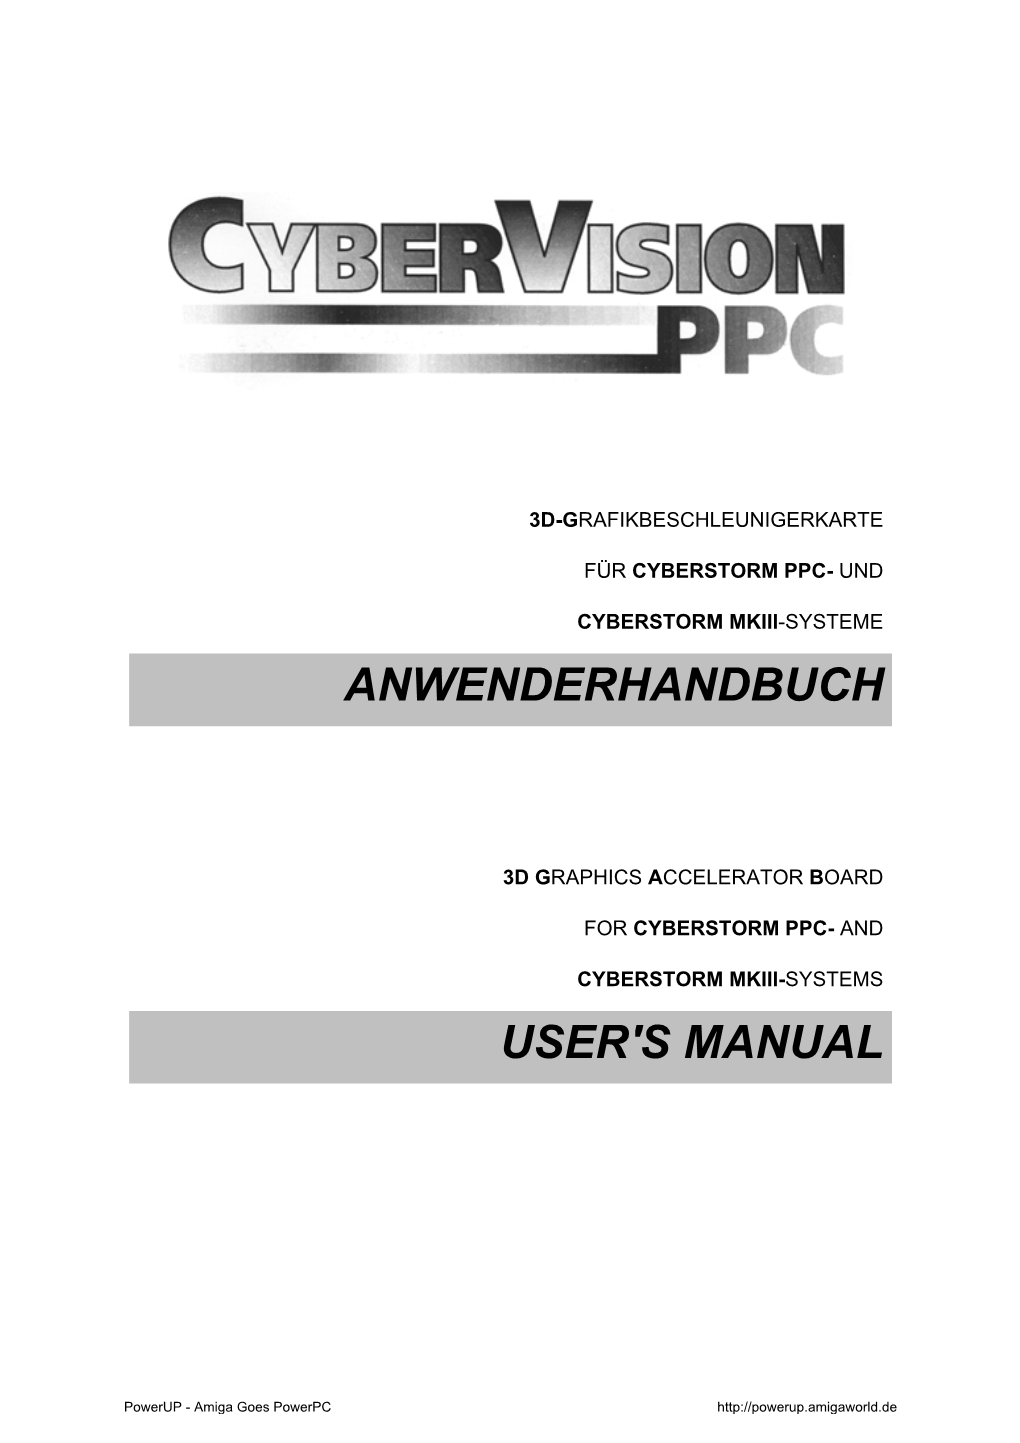 Cybervision Ppc in Betrieb Nehmen